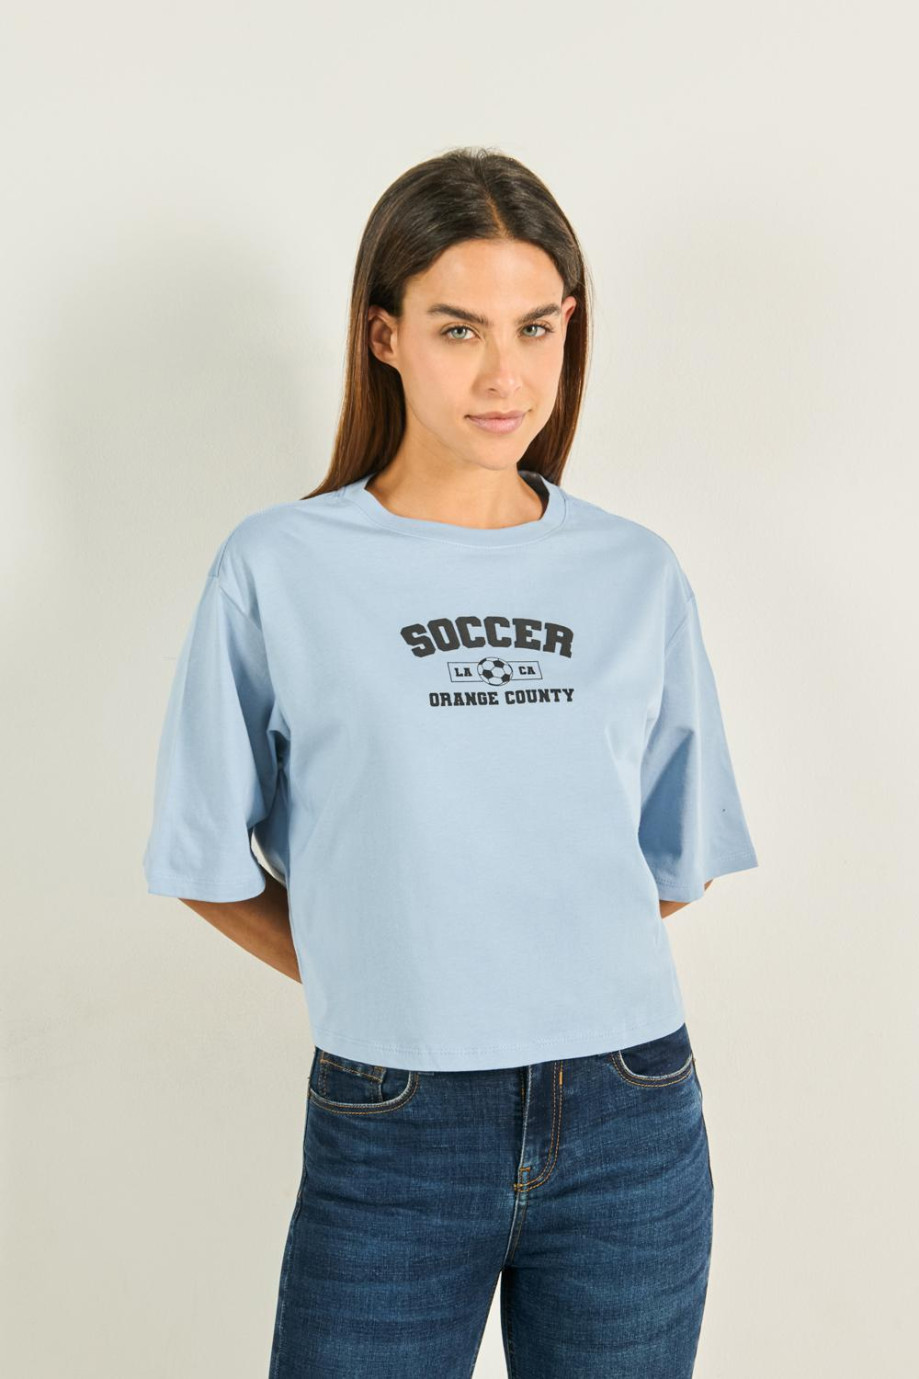 Camiseta crop top oversize unicolor con diseño college